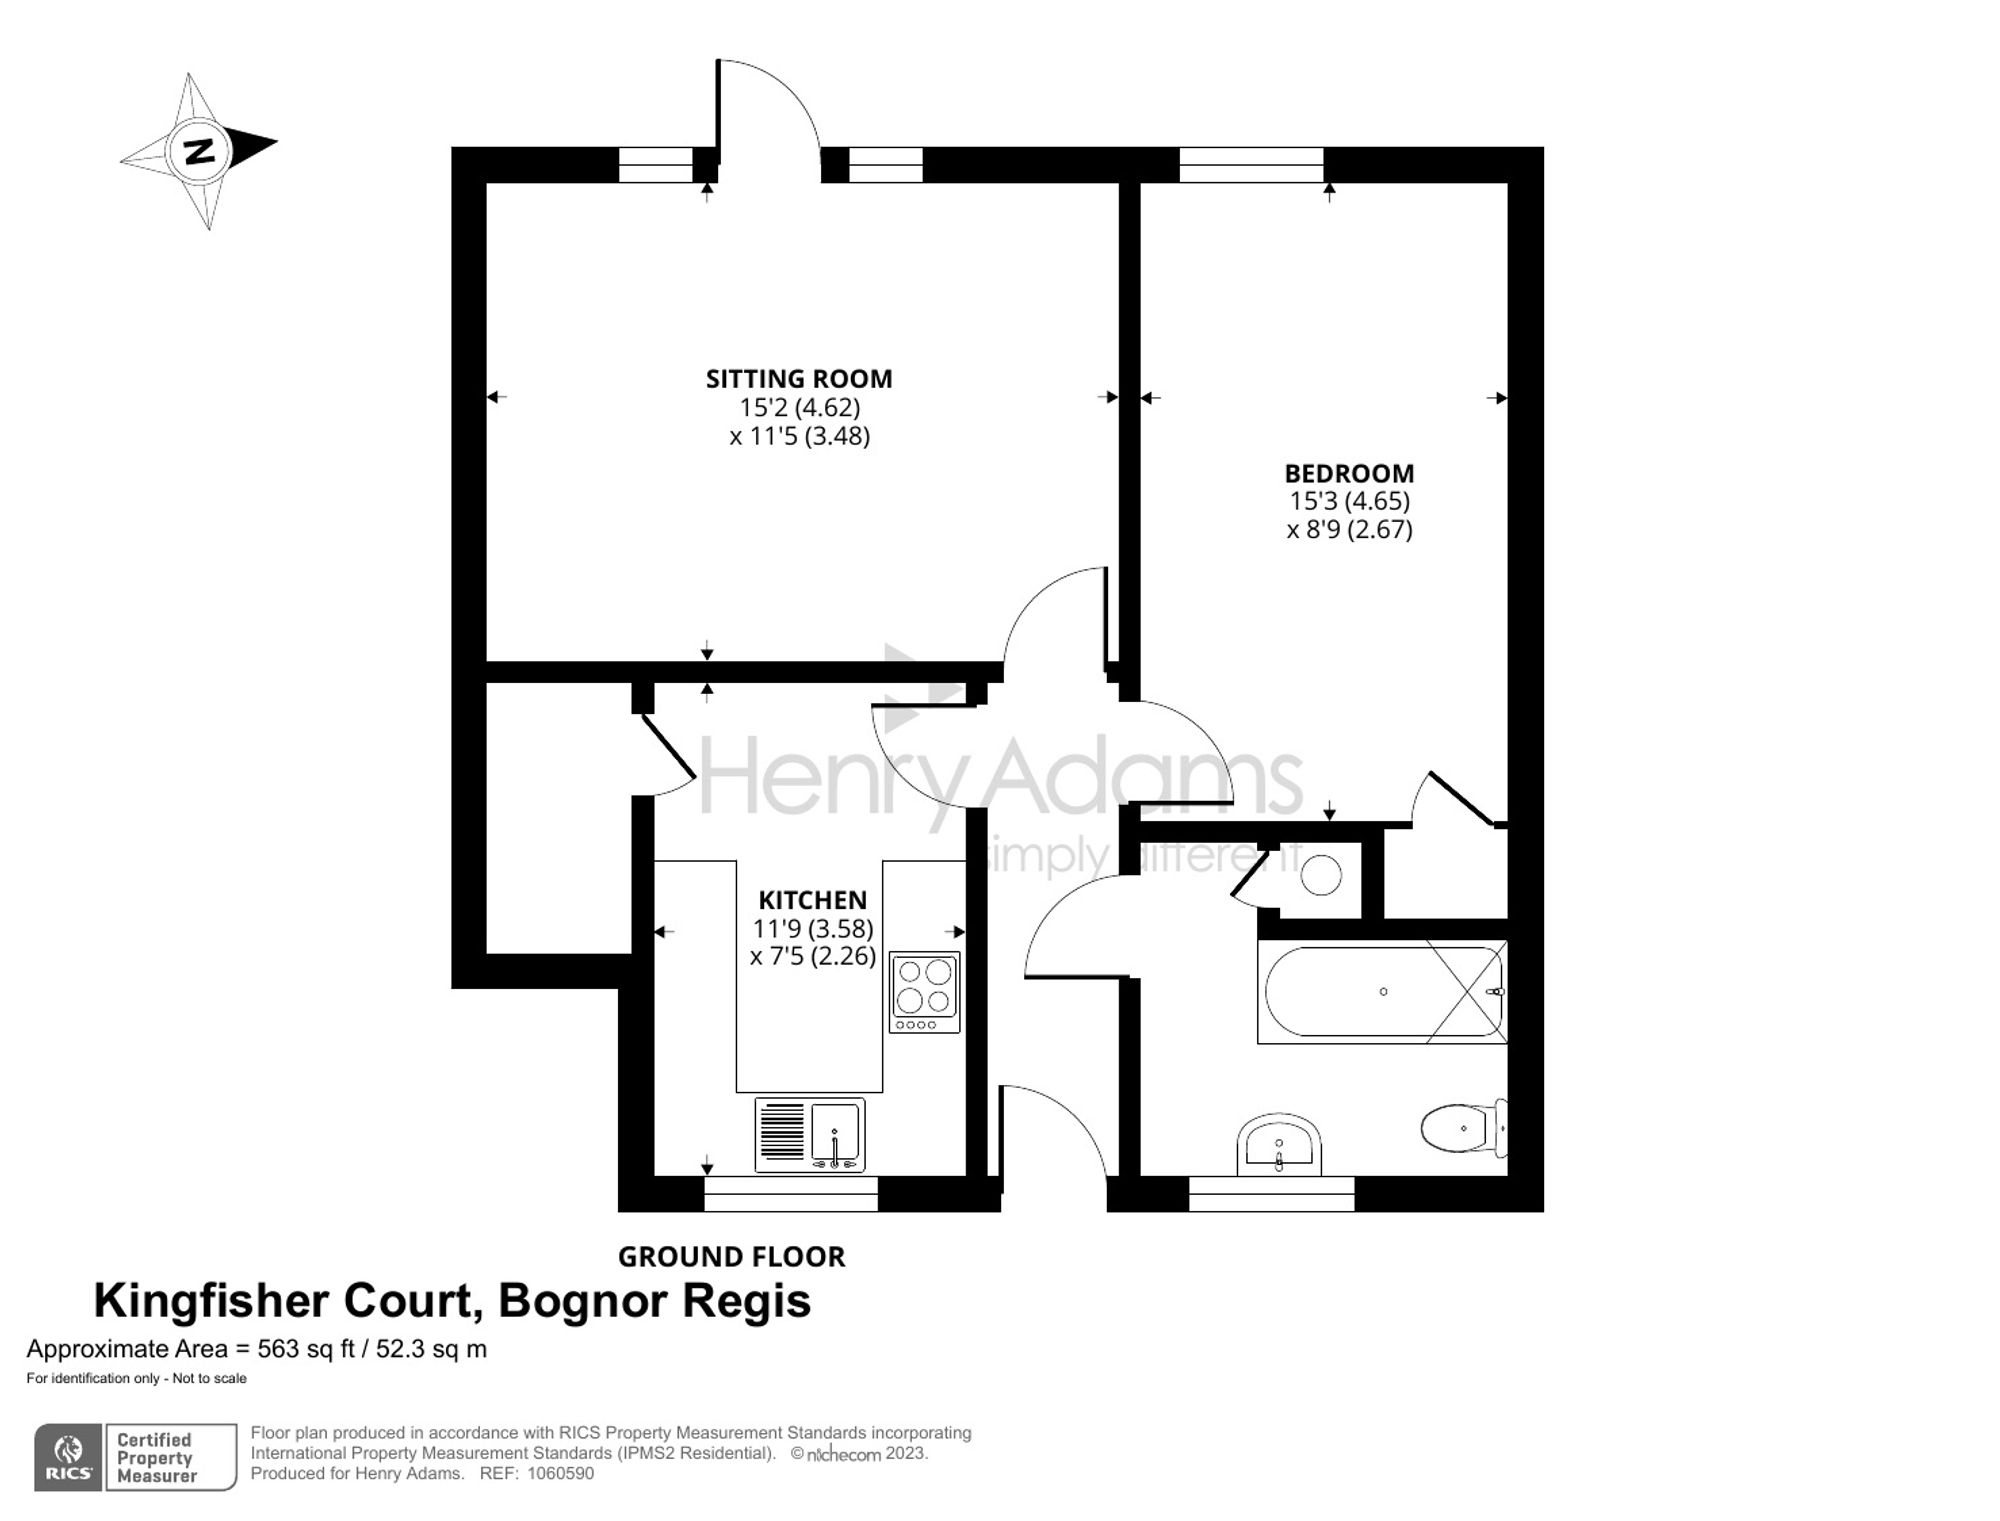 Kingfisher Court, Bognor Regis, PO22 floorplans